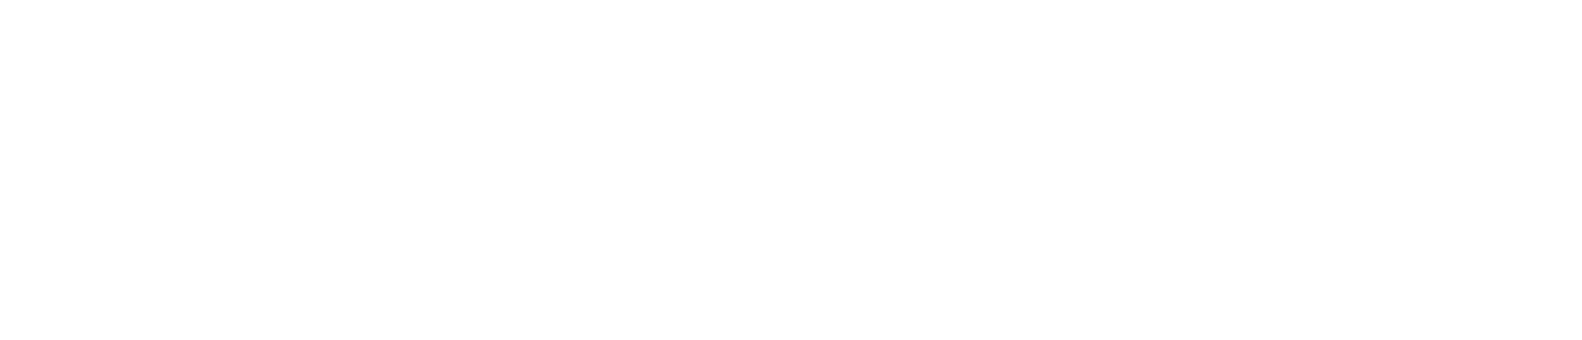 HBM Healthcare Investments Logo groß für dunkle Hintergründe (transparentes PNG)